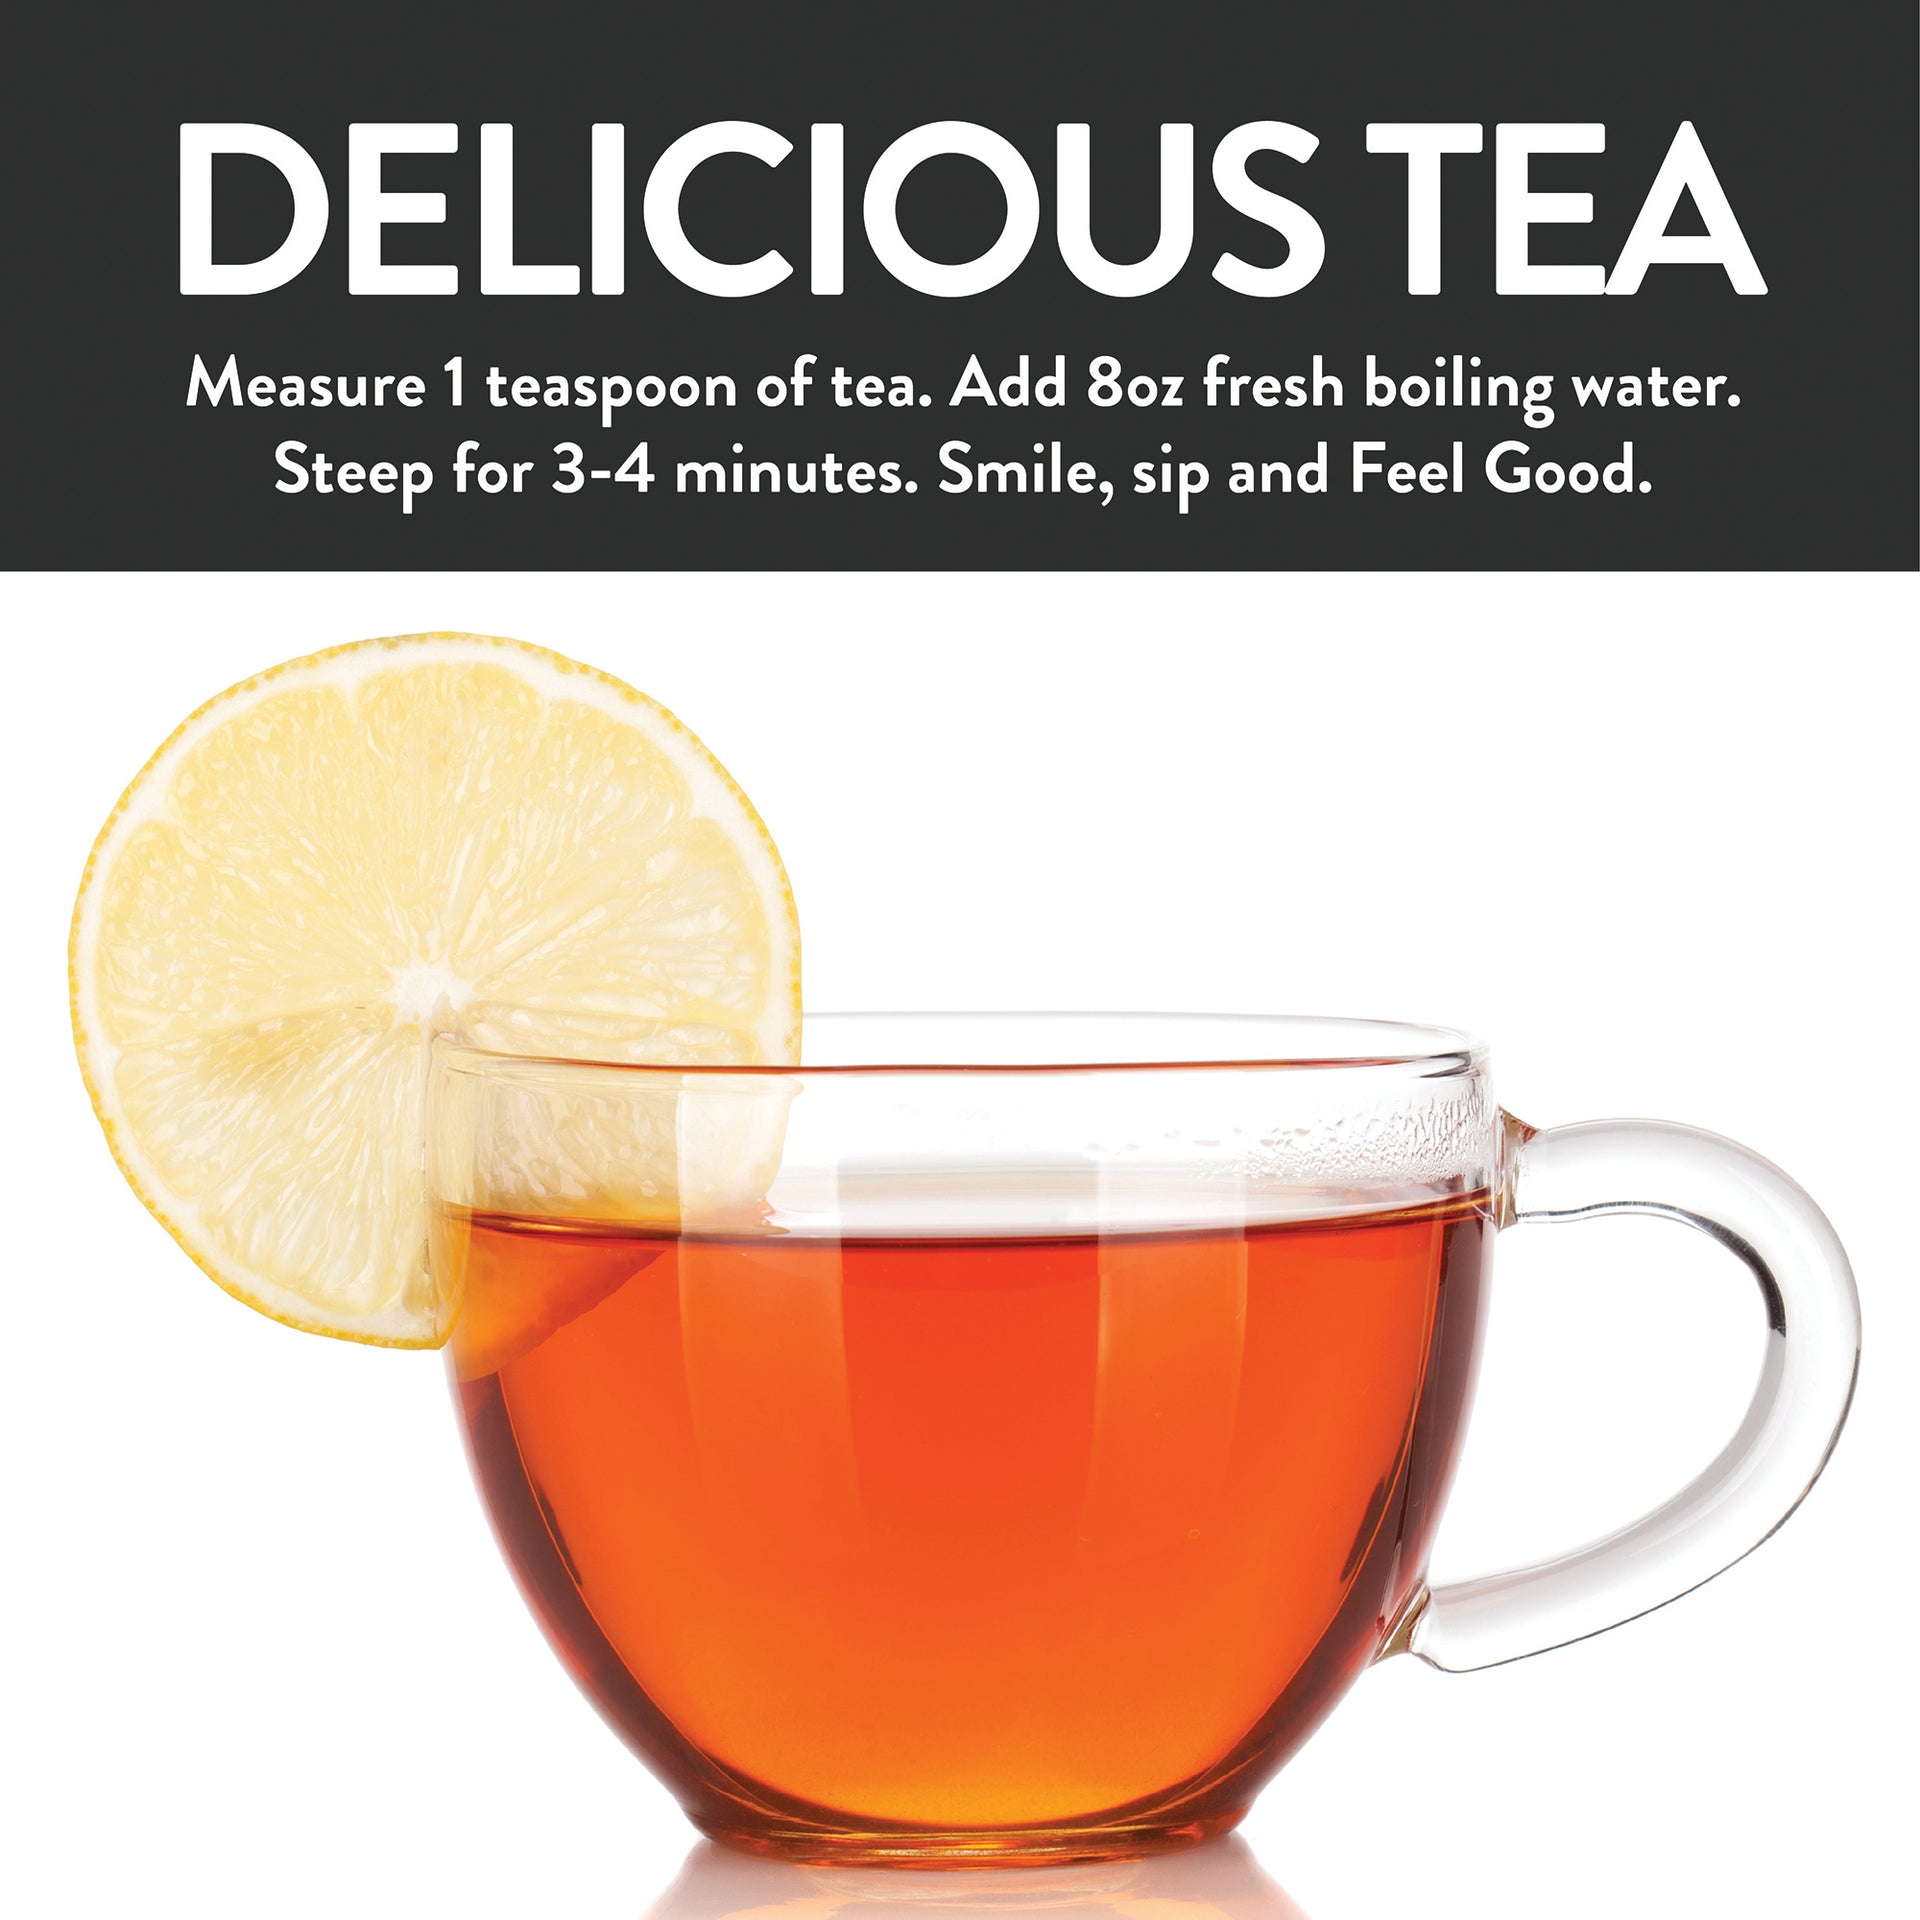 English Breakfast Loose Leaf Tea – FGO - From Great Origins